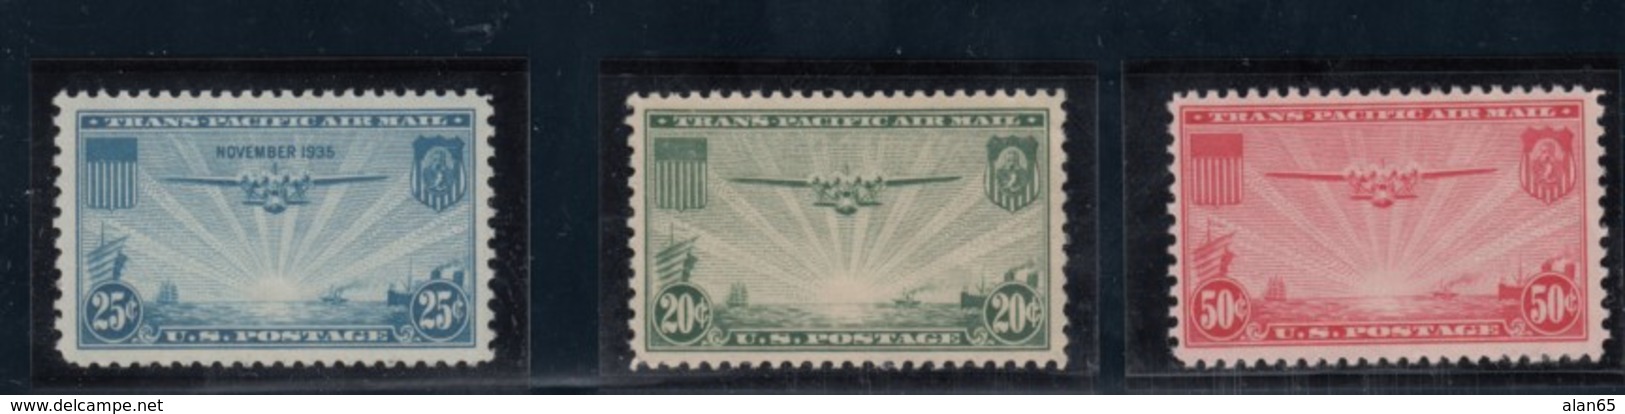 Lot Of 4 Mint US Air Mail Stamps, Sc#C20 25c #C21 20c, #C22 50c China Clipper Series, #C236c Air Mail 1935-38 Issues - 1b. 1918-1940 Unused